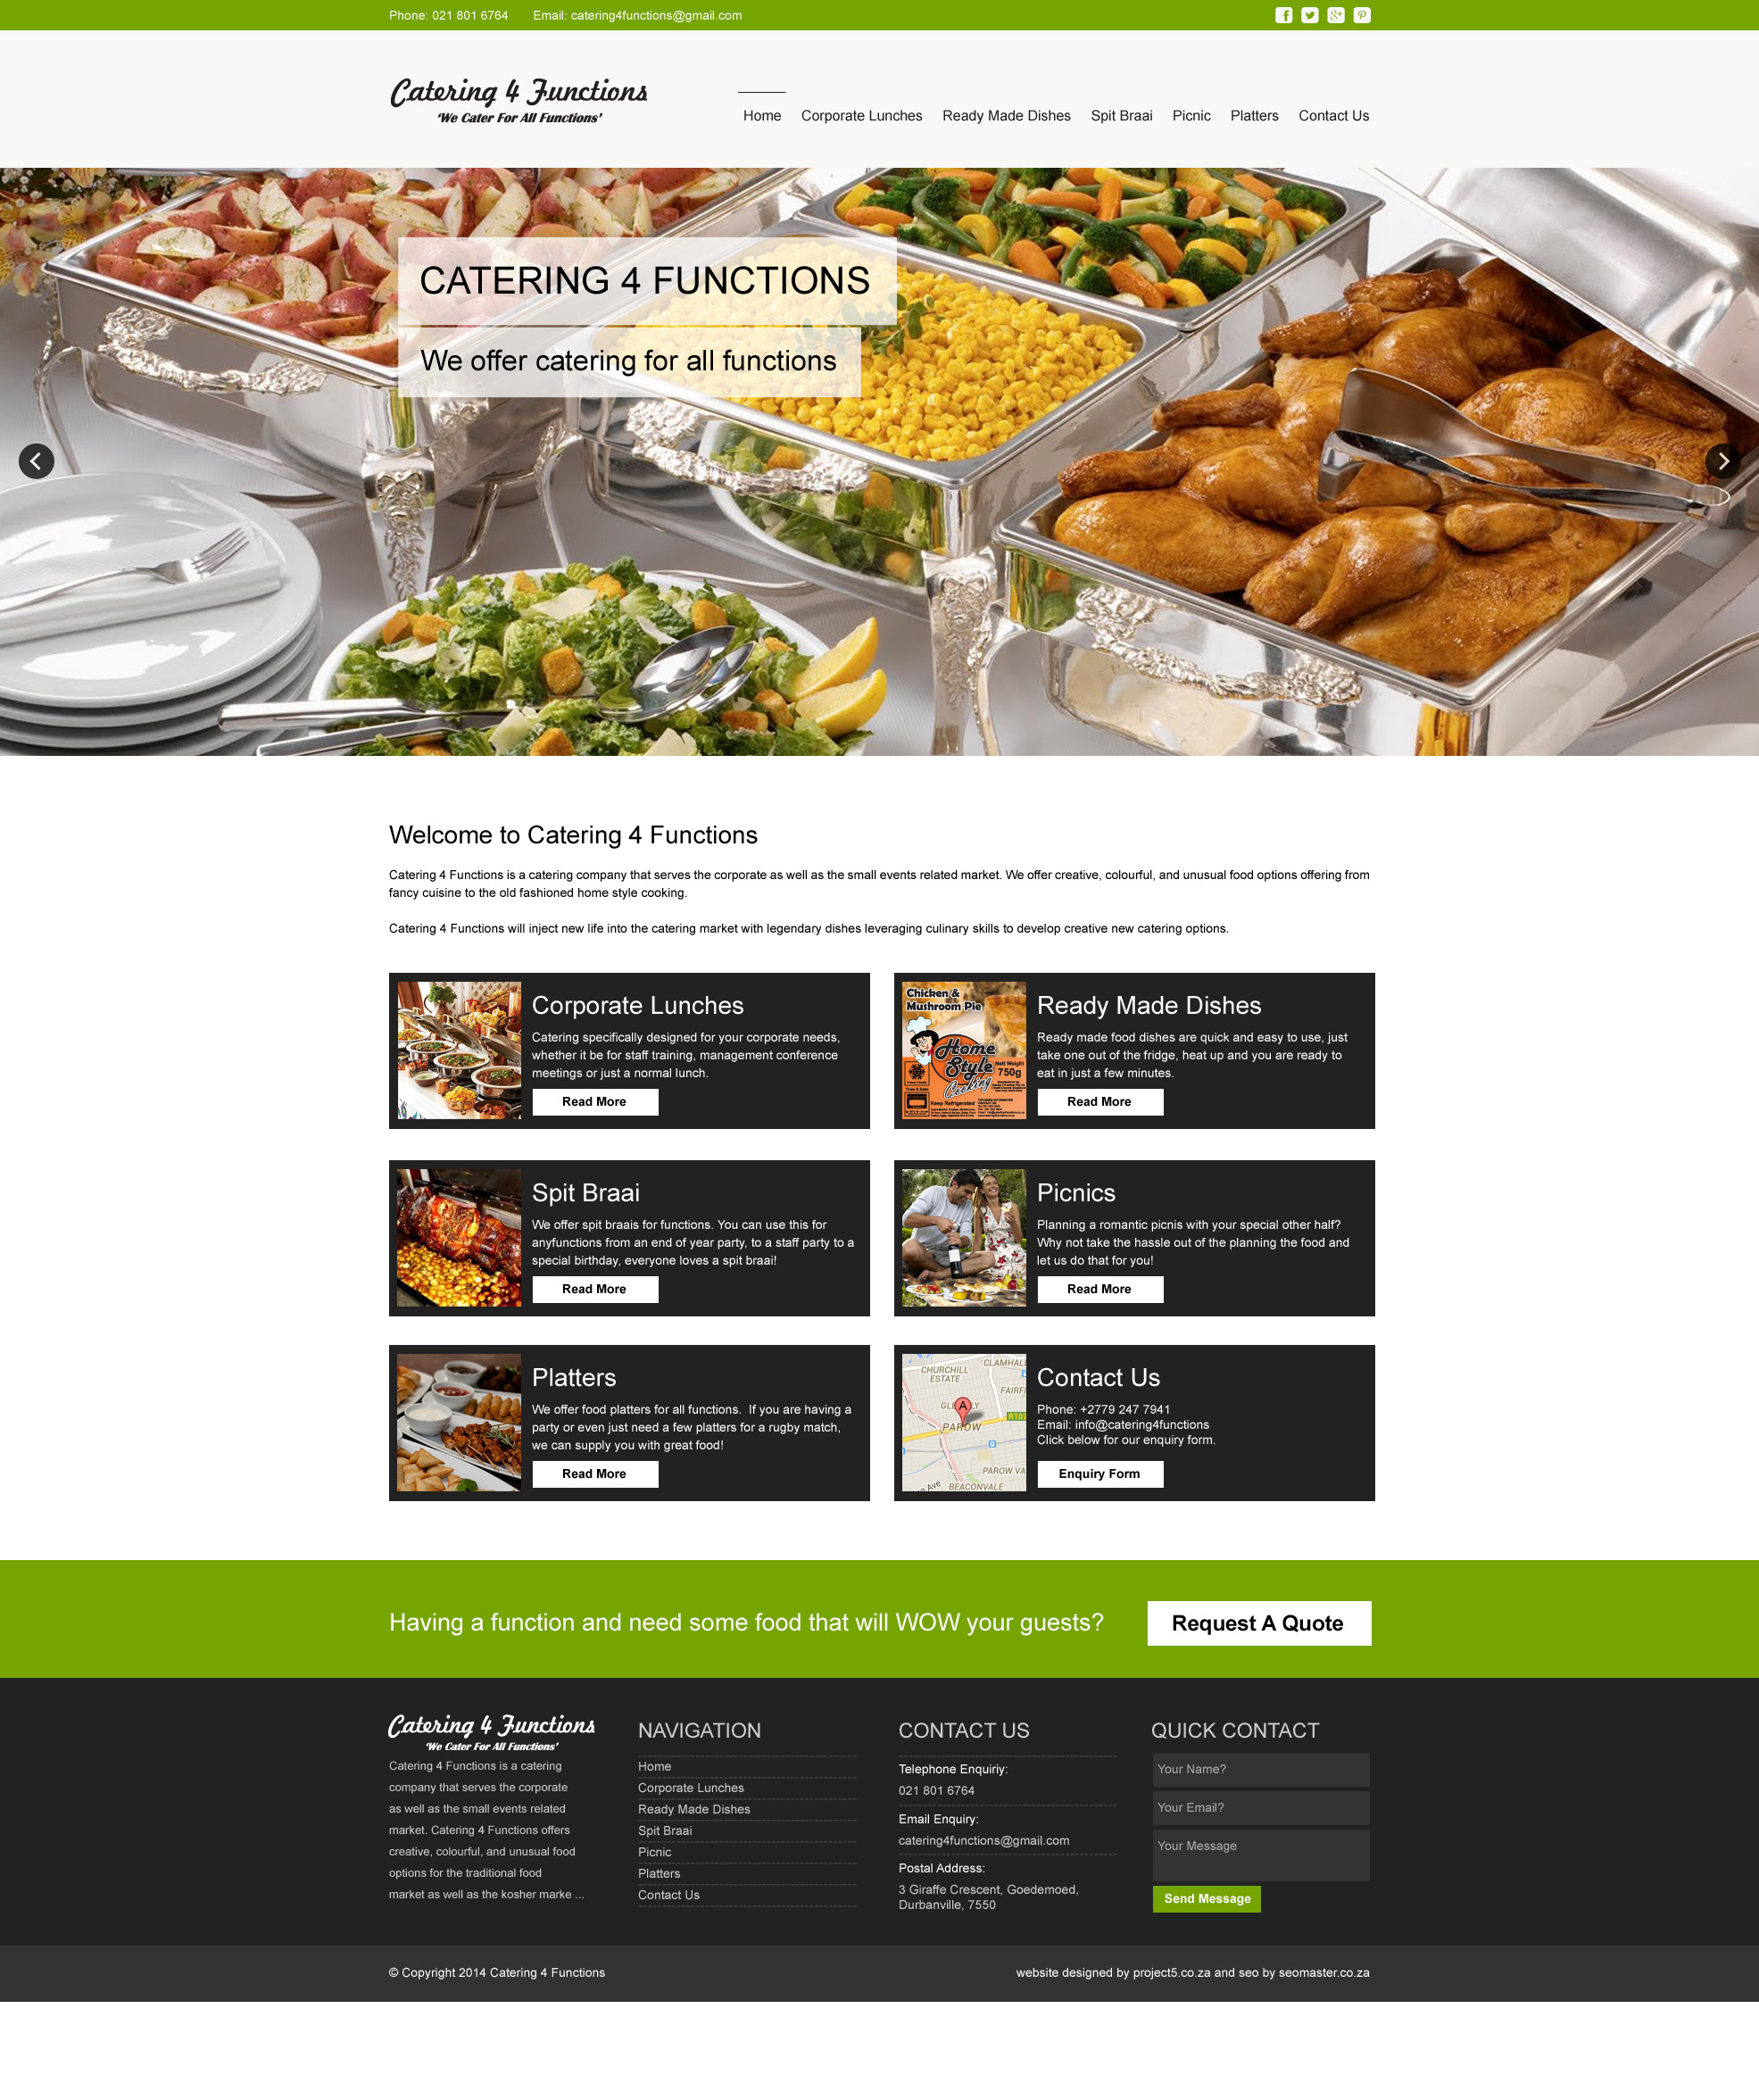 Responsive Wordpress website designed for Catering 4 Functions